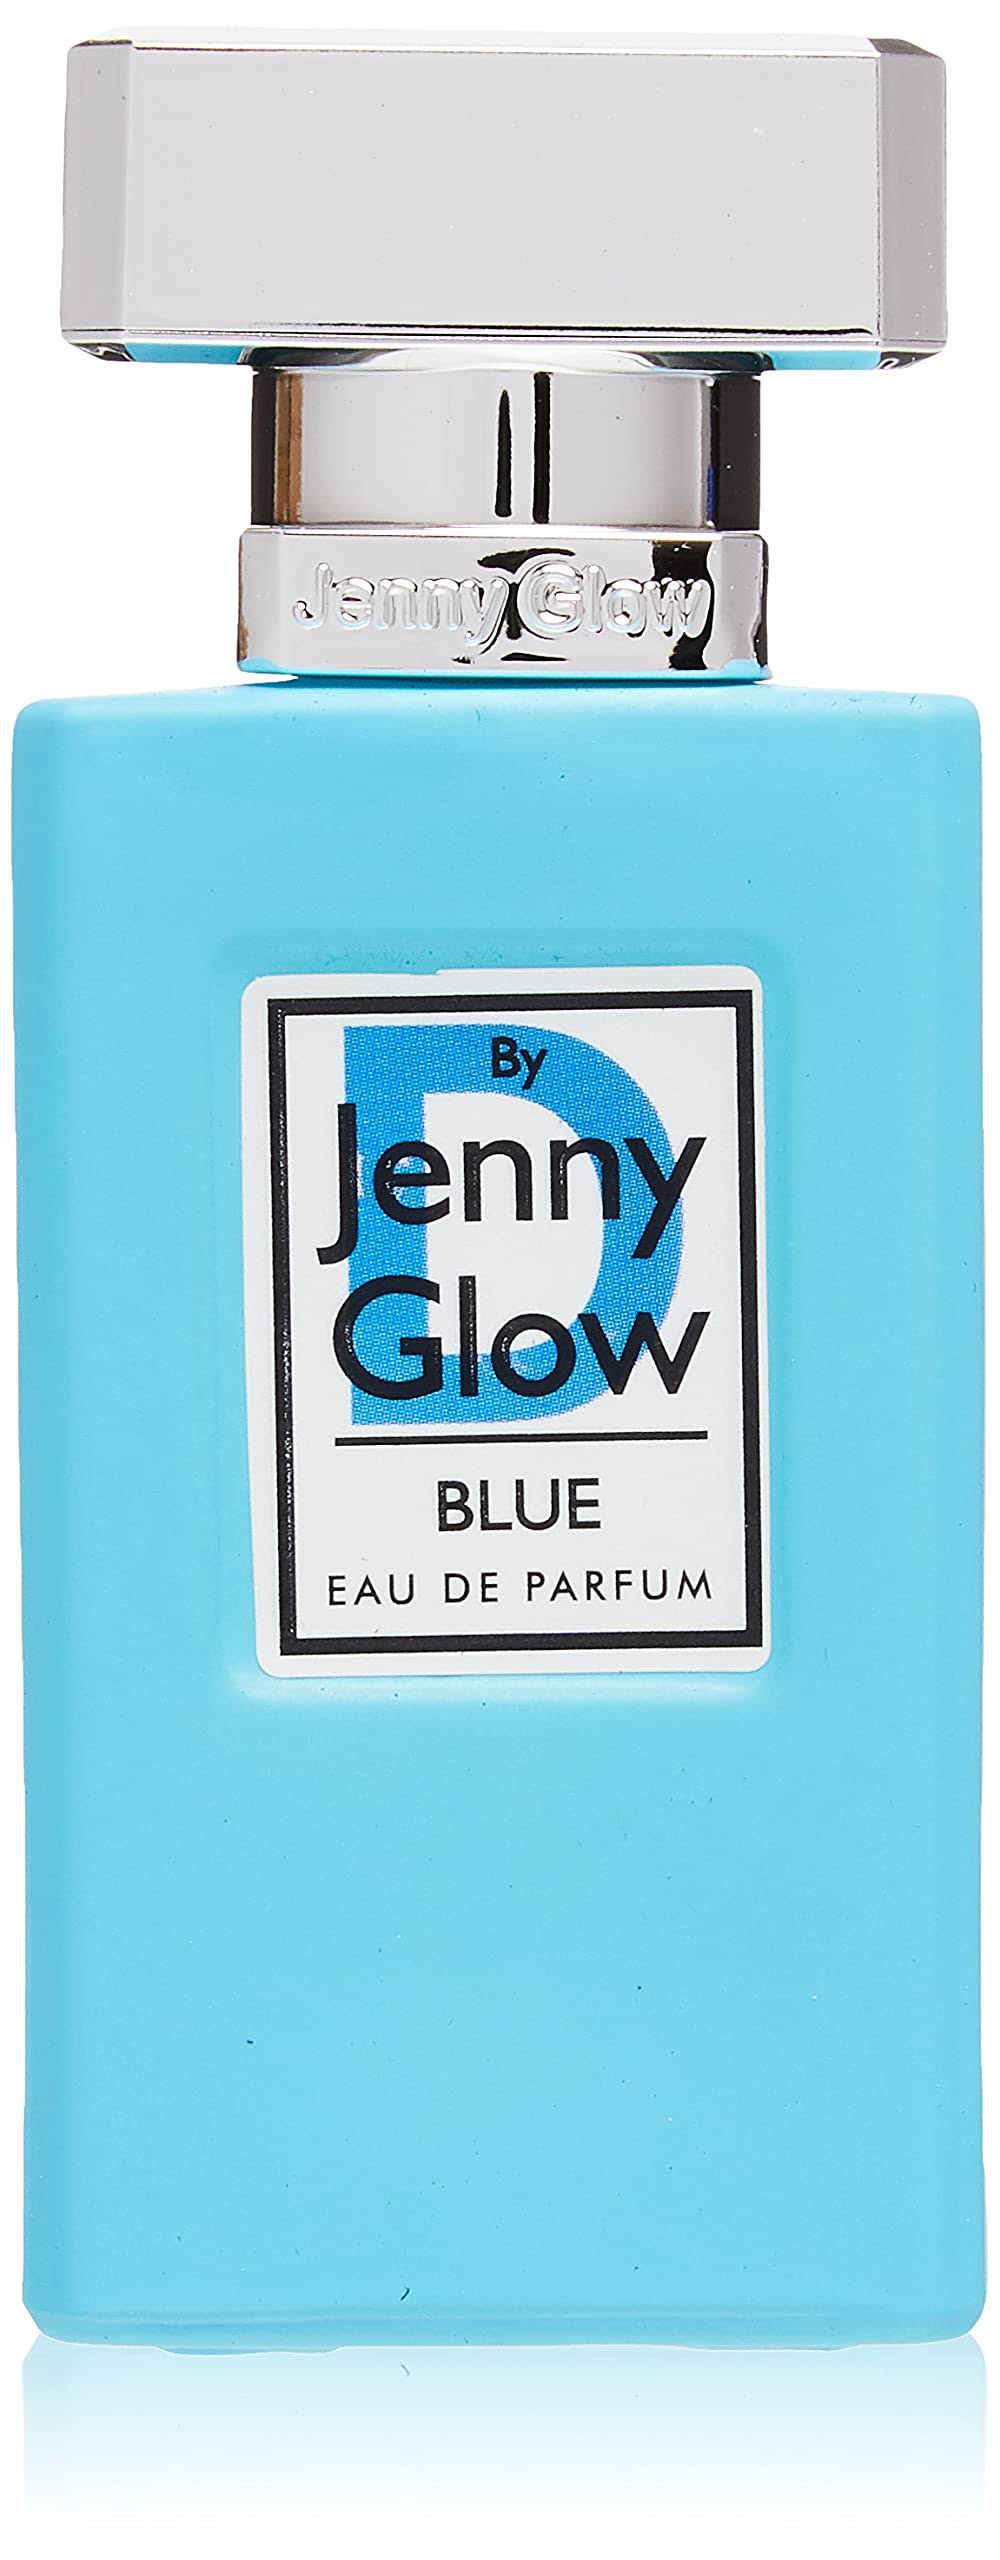 D By Jenny Glow Blue EDP 30ml